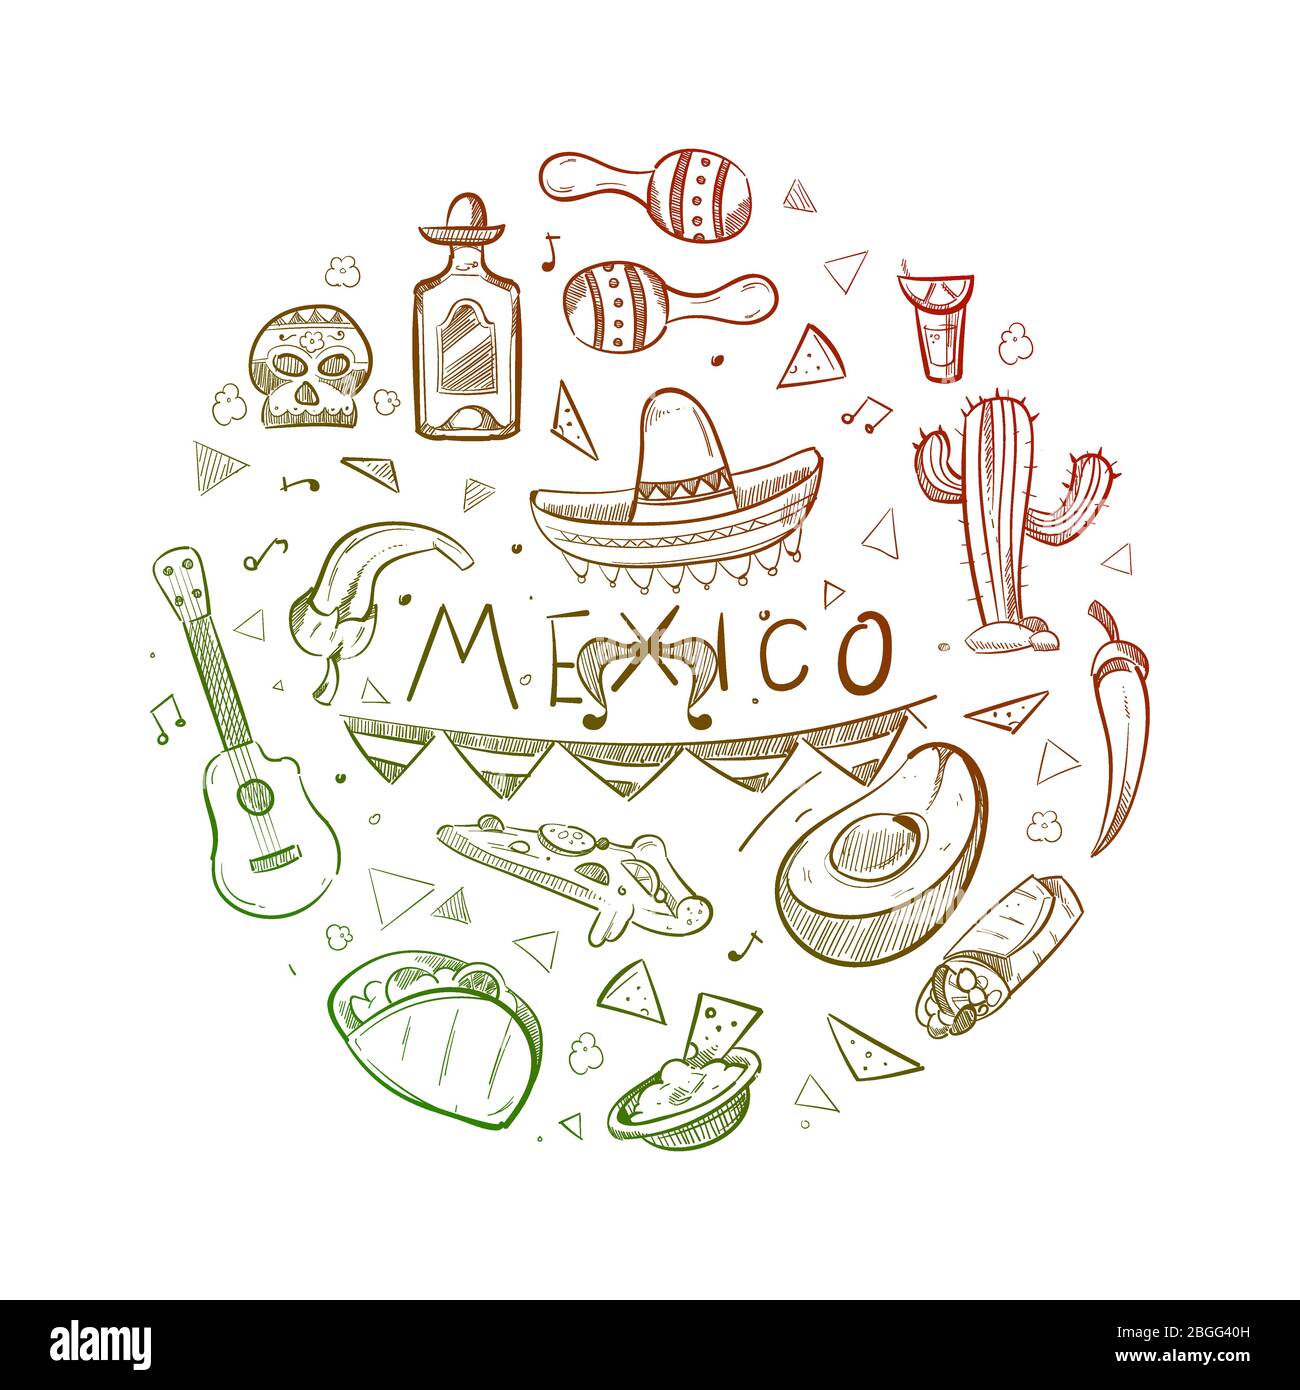 Hand drawn mexican symbols - sketch mexico logo or emblem, vector illustration Stock Vector